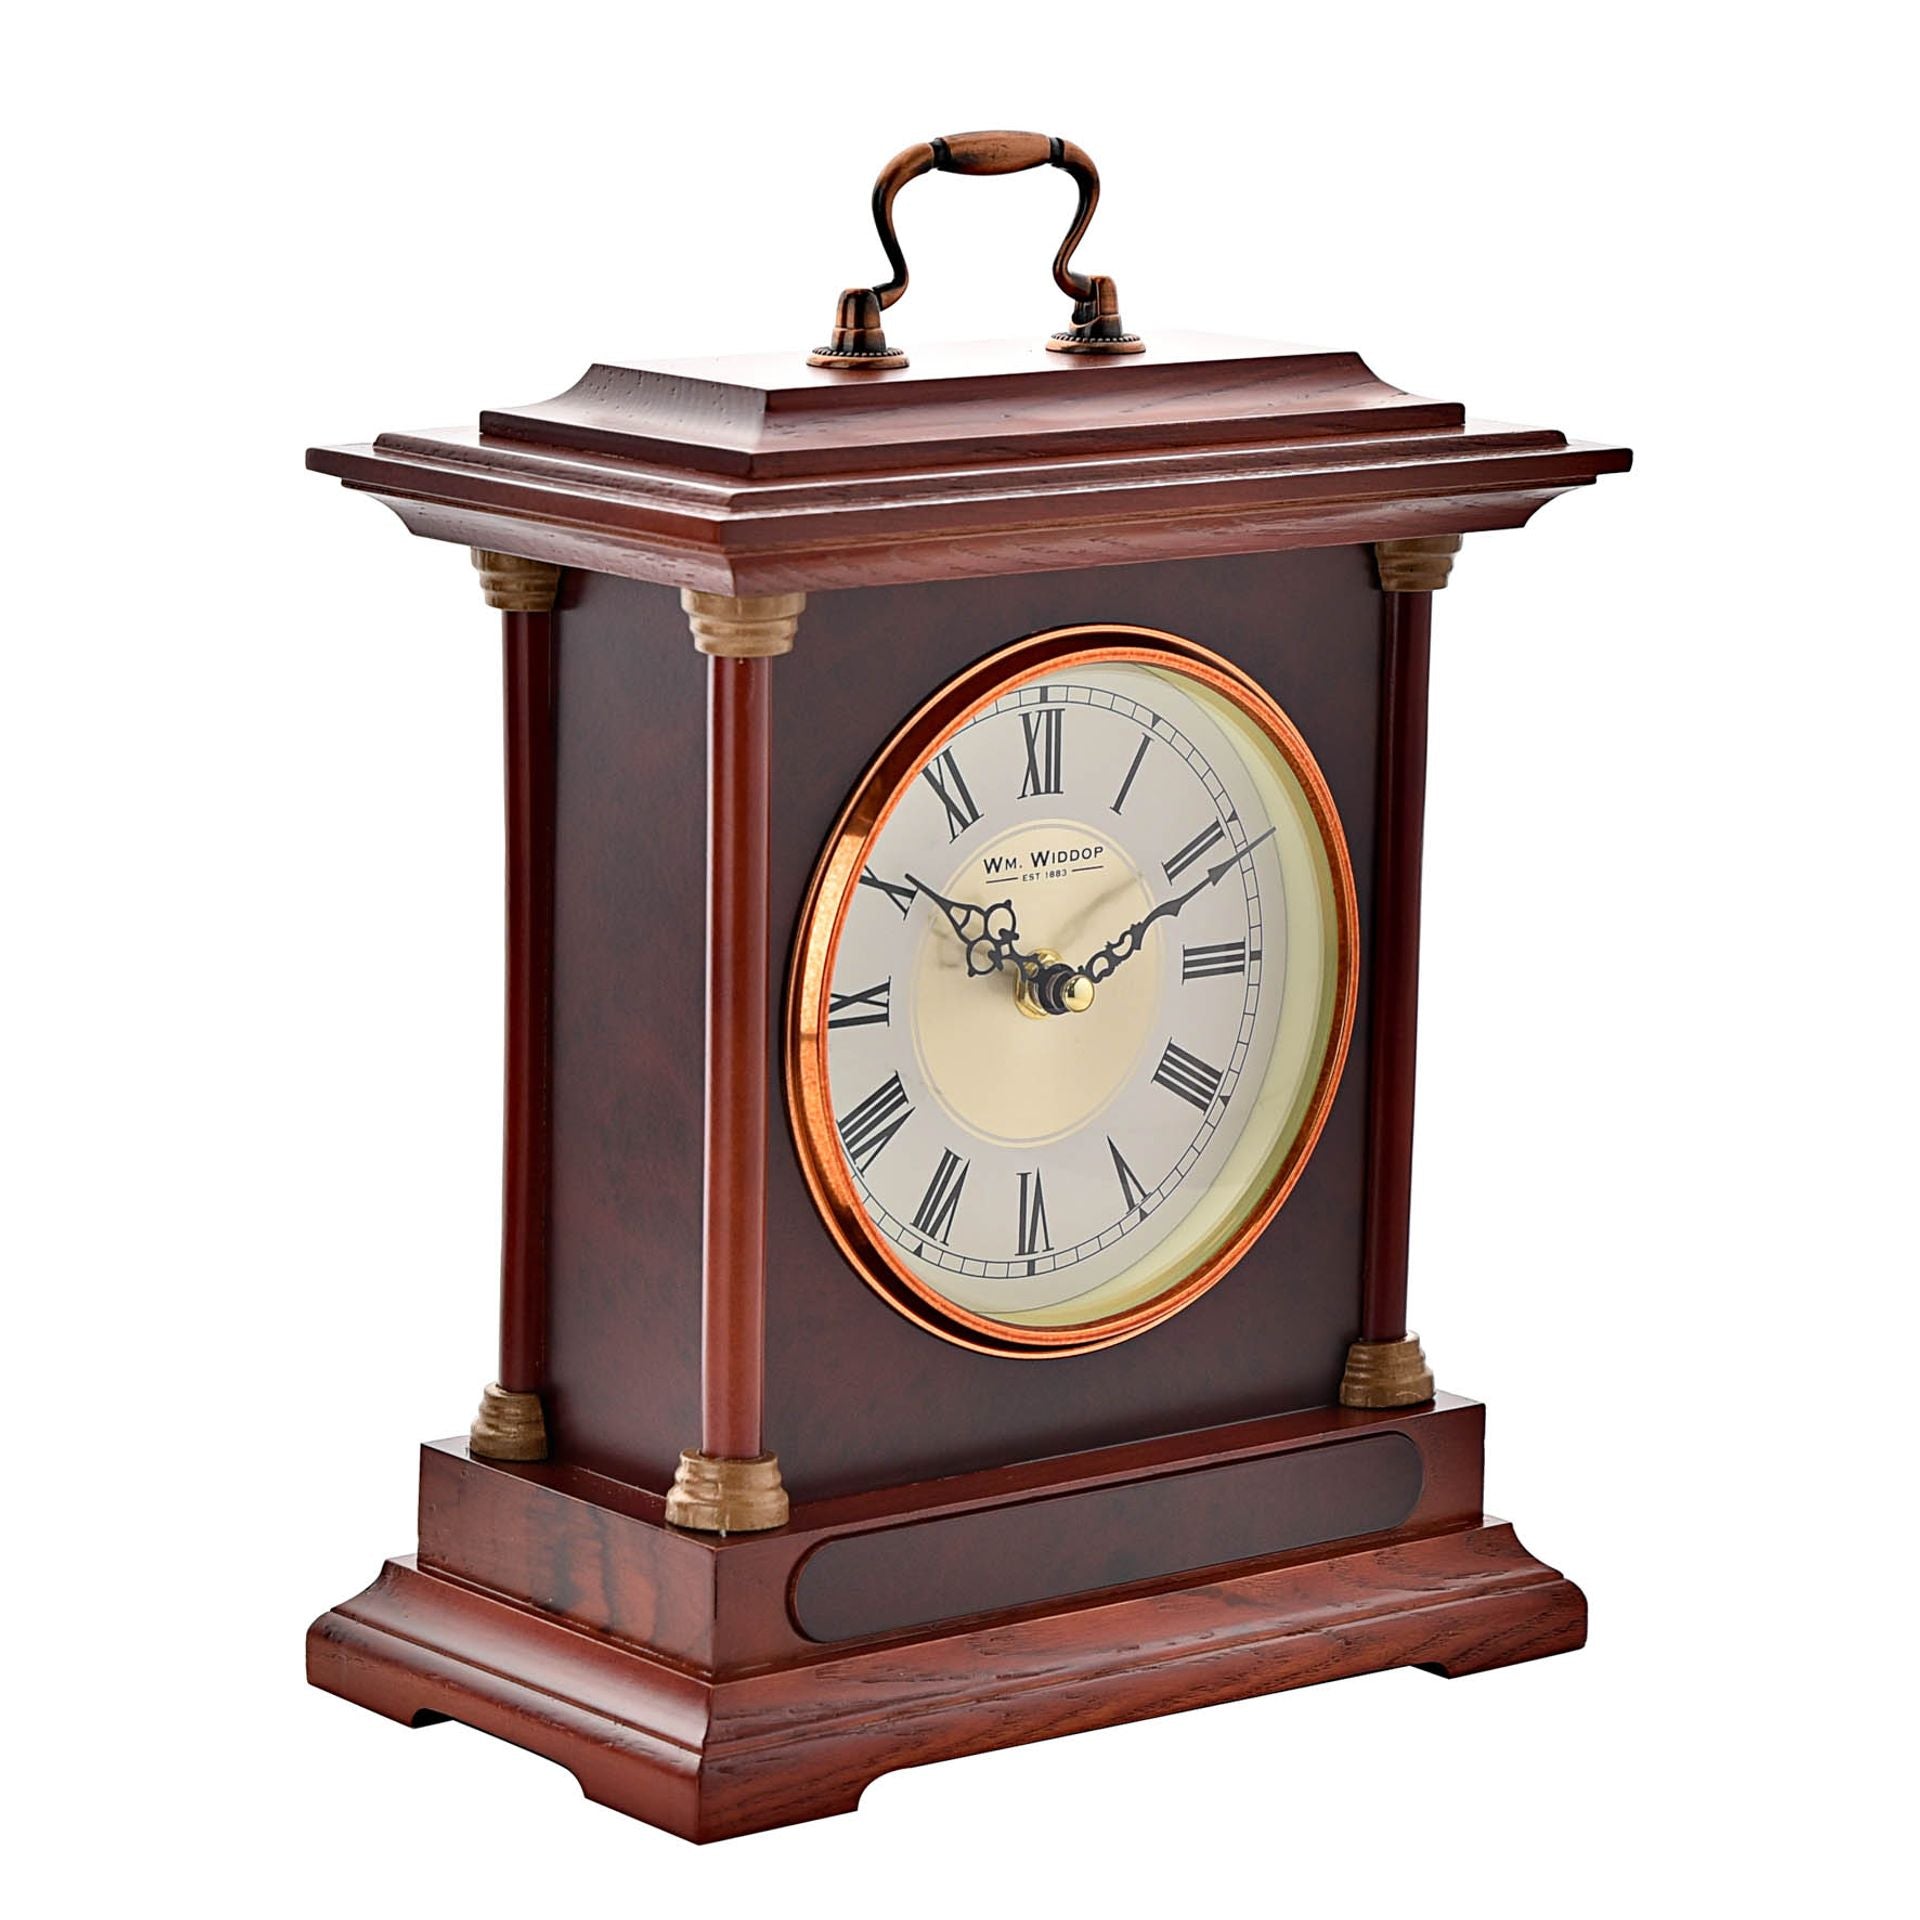 WM. Widdop Wooden Carriage Mantel Clock